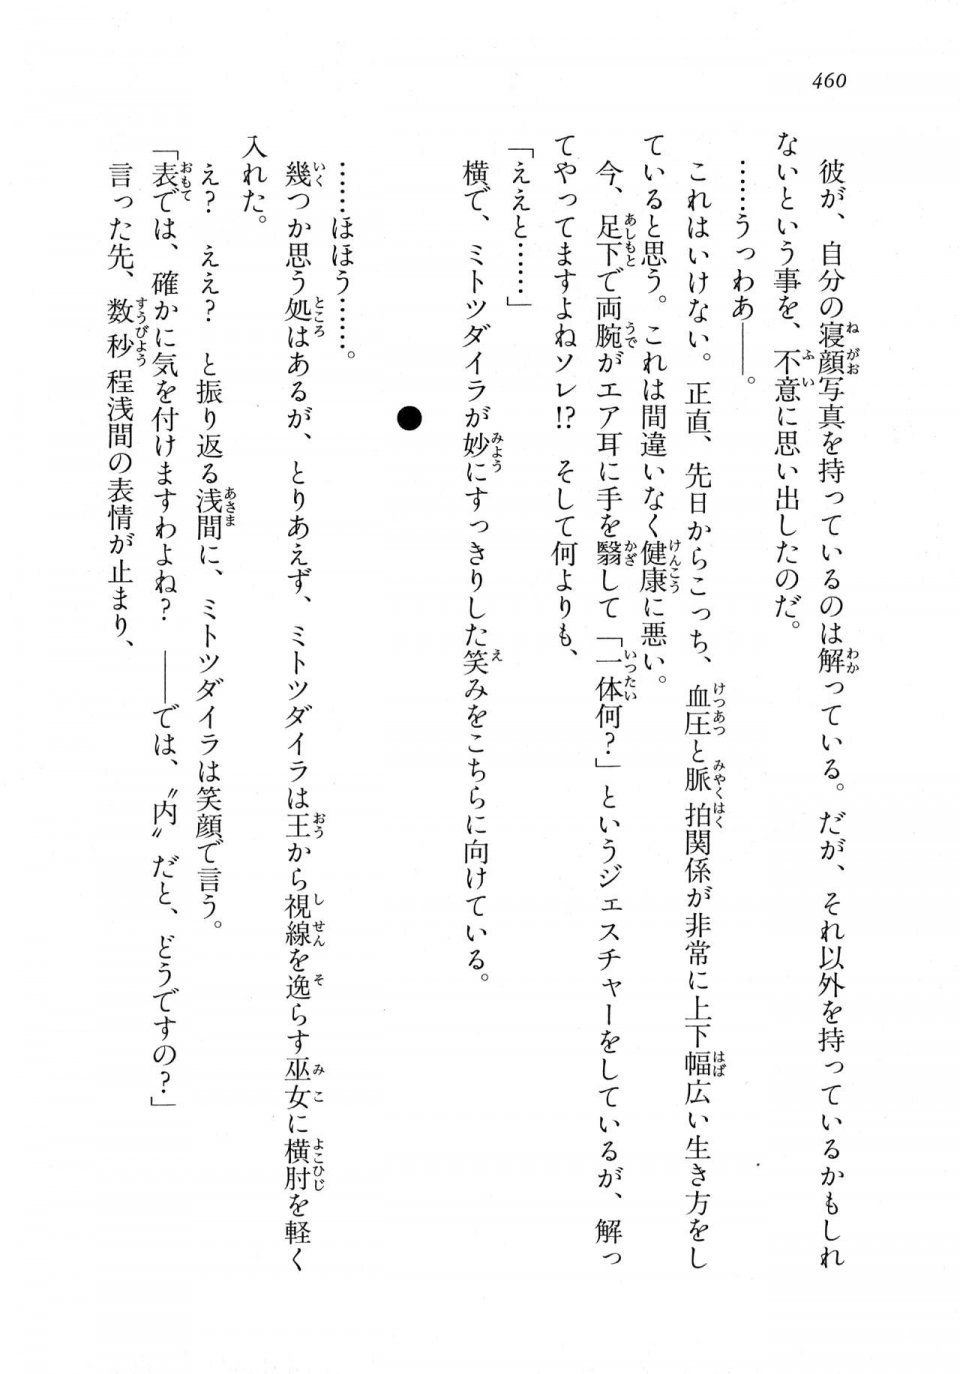 Kyoukai Senjou no Horizon LN Vol 18(7C) Part 1 - Photo #460